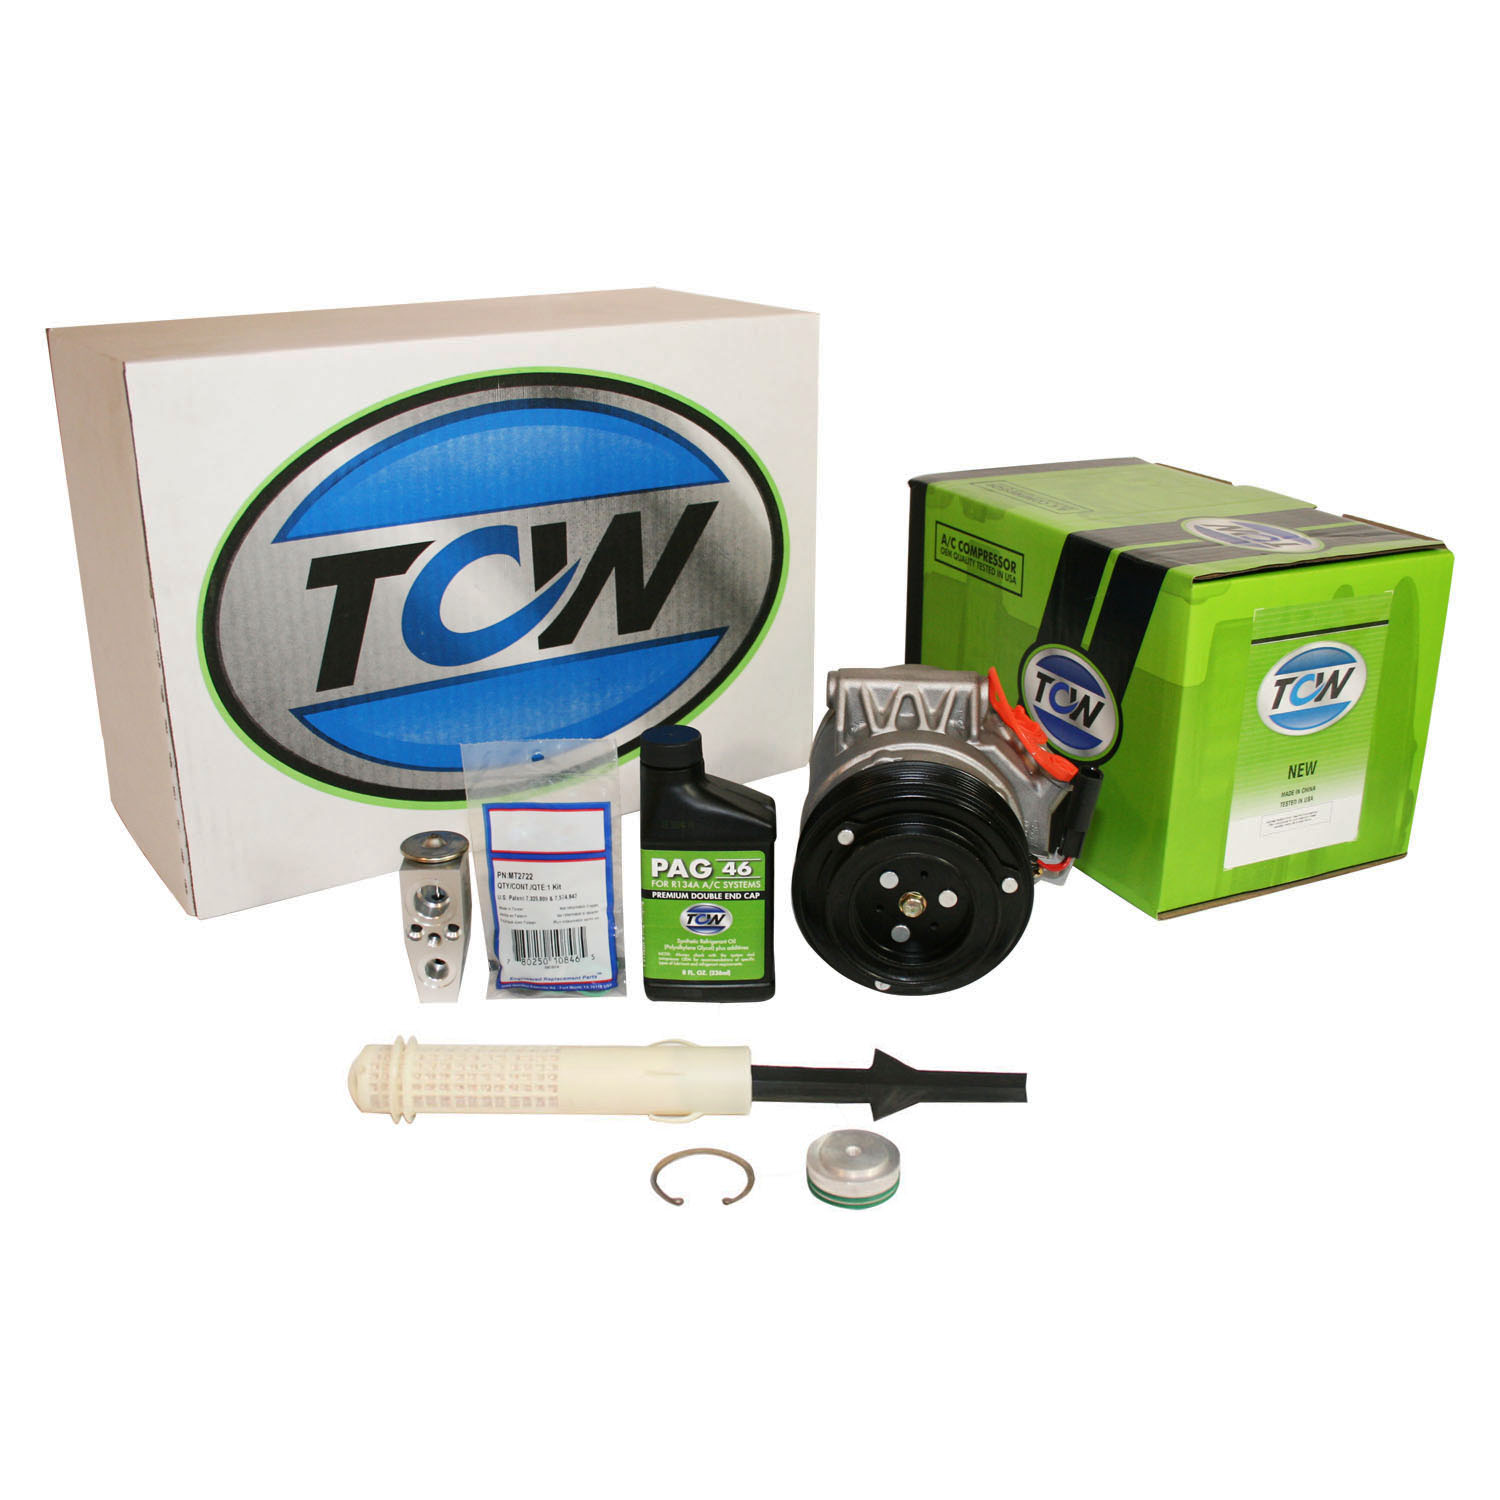 TCW Vehicle A/C Kit K1000463N New Product Image field_60b6a13a6e67c